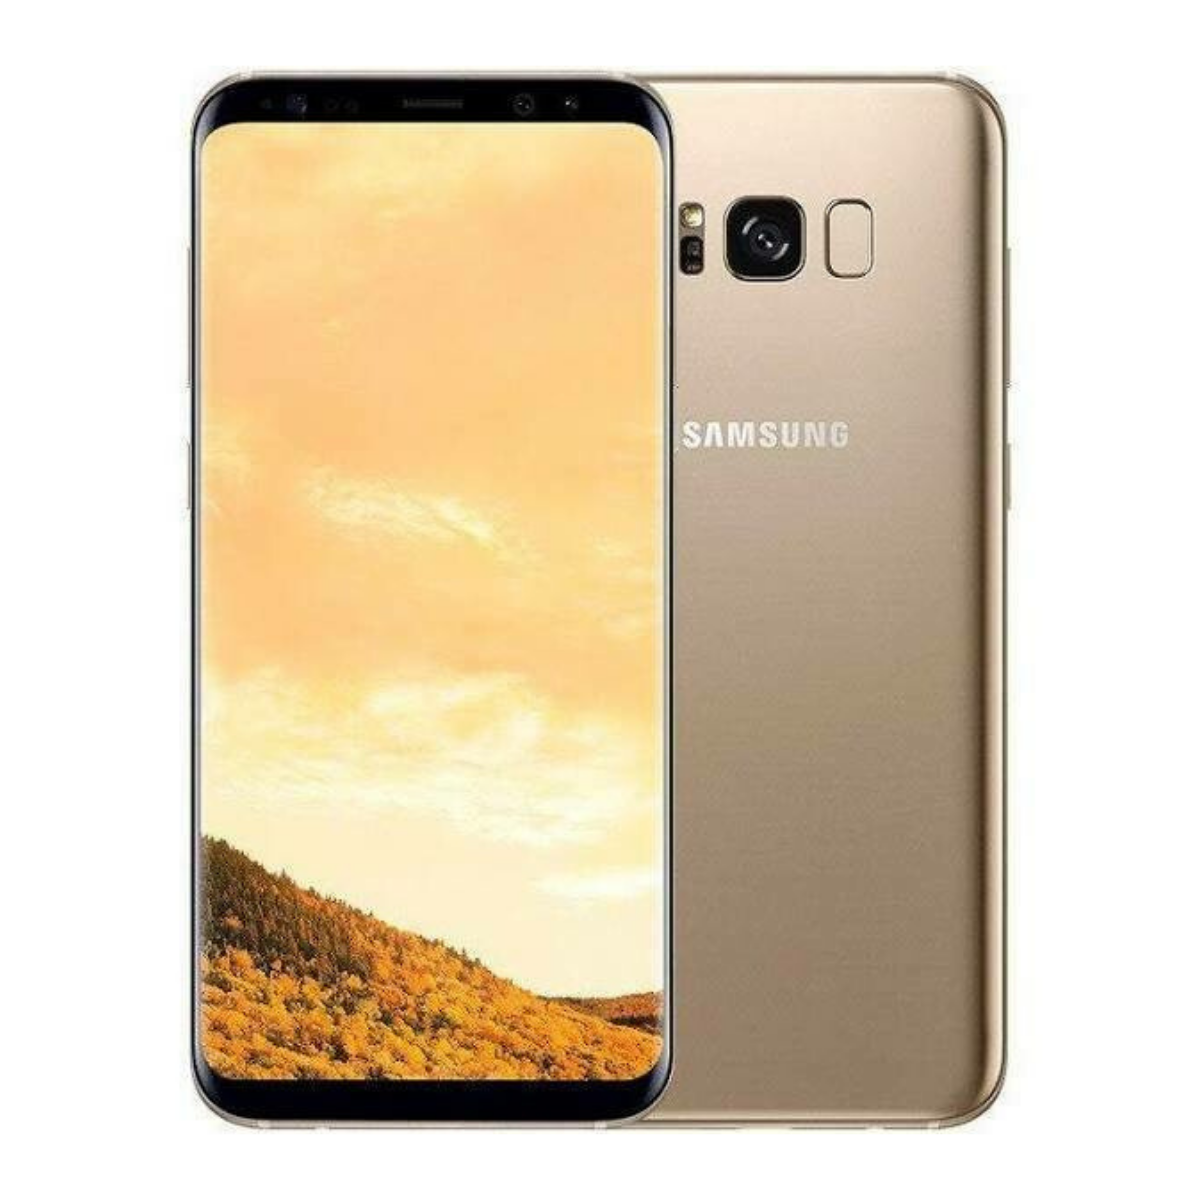 Sim Free Samsung Galaxy S8 Plus 64GB Unlocked Mobile Phone - Gold